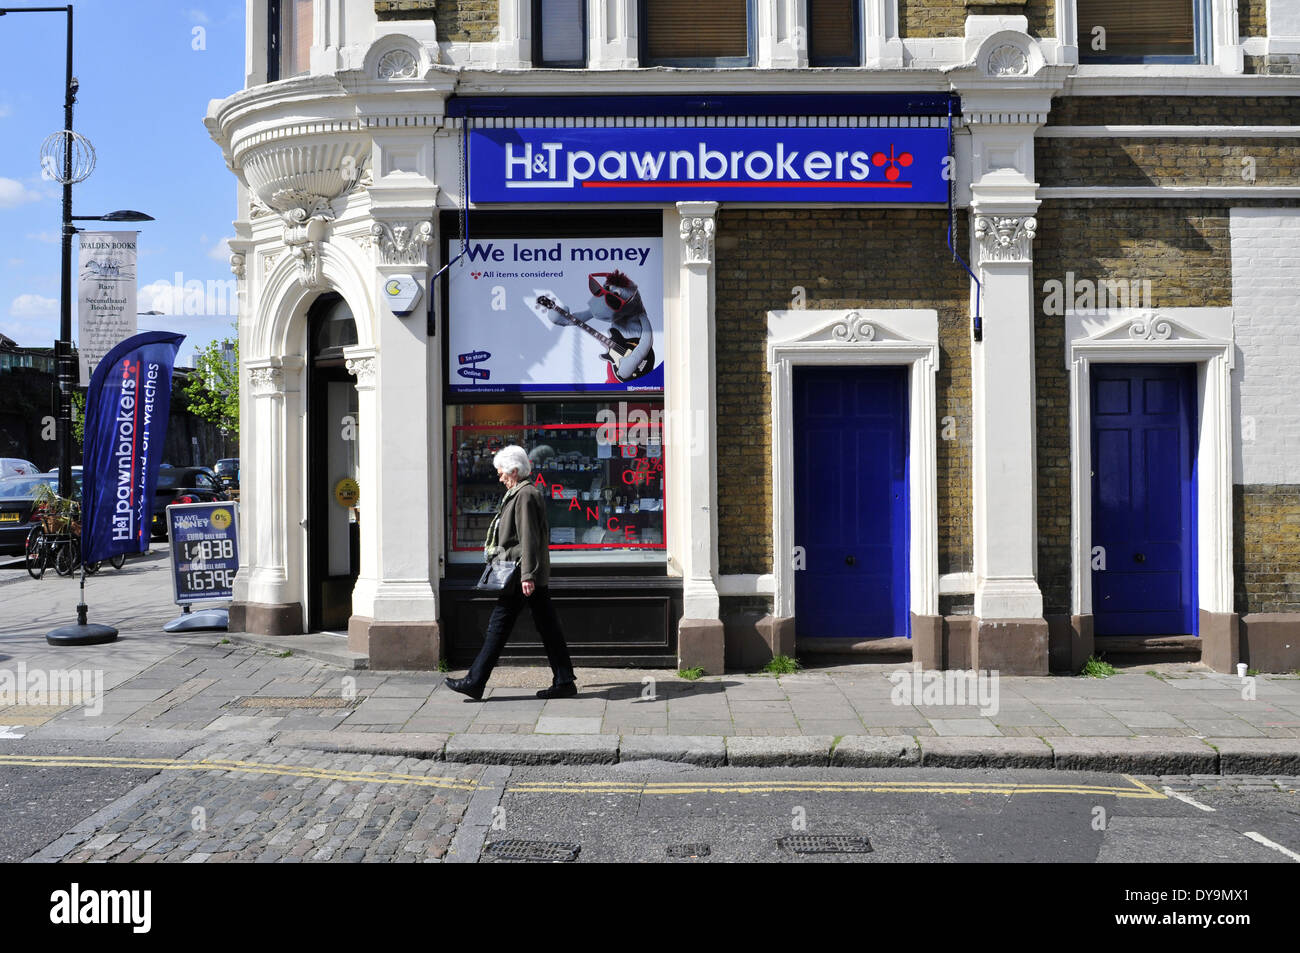 A woman walks past H&T pawnbrokers shop, London, UK Stock Photo